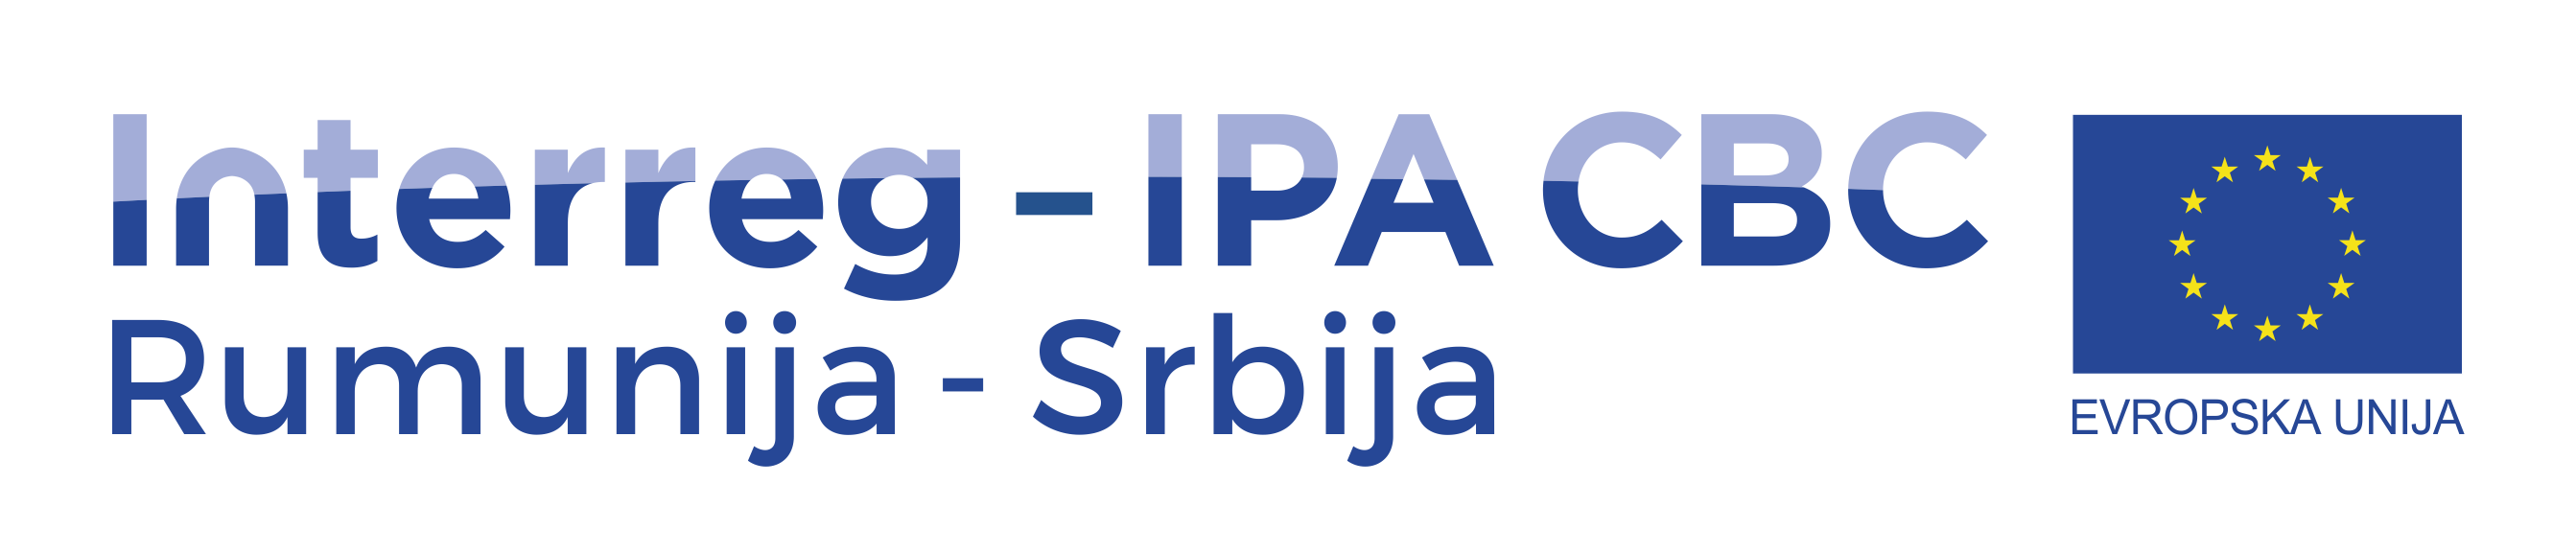 Interreg IPA logo vers. 2 SRB lat t